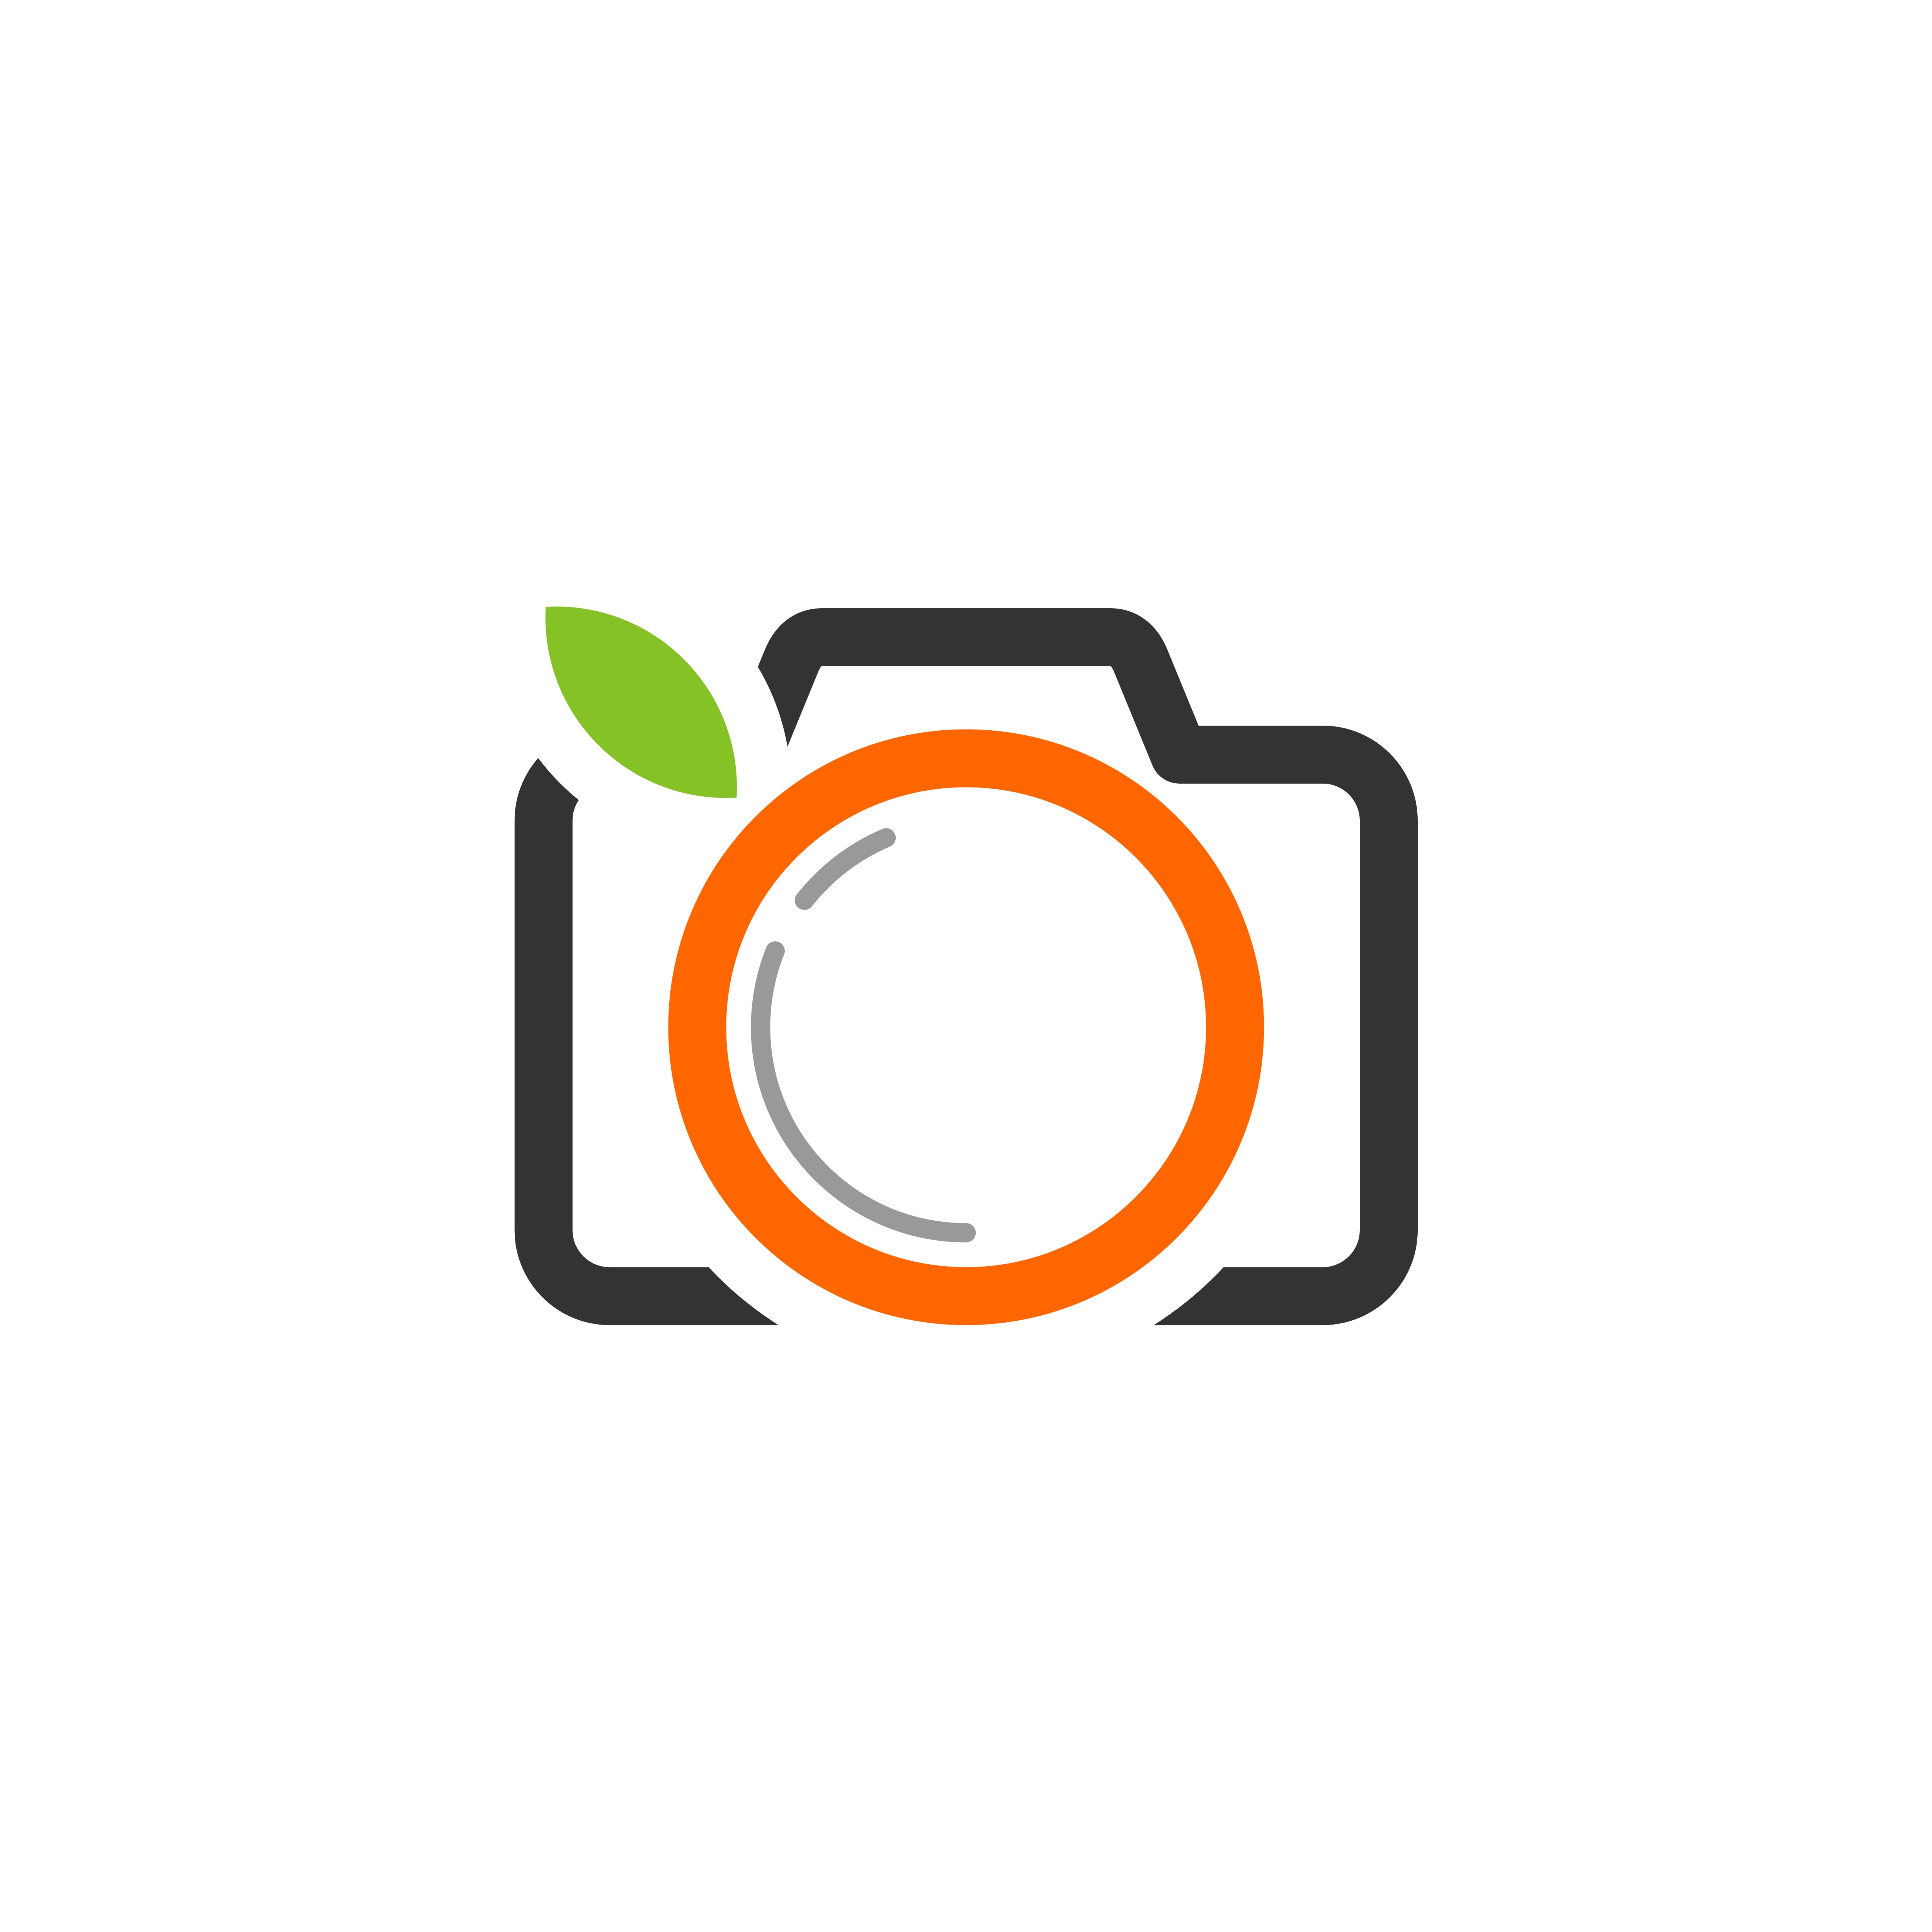 Camera Icon Logo Template Illustration Design. Vector EPS 10